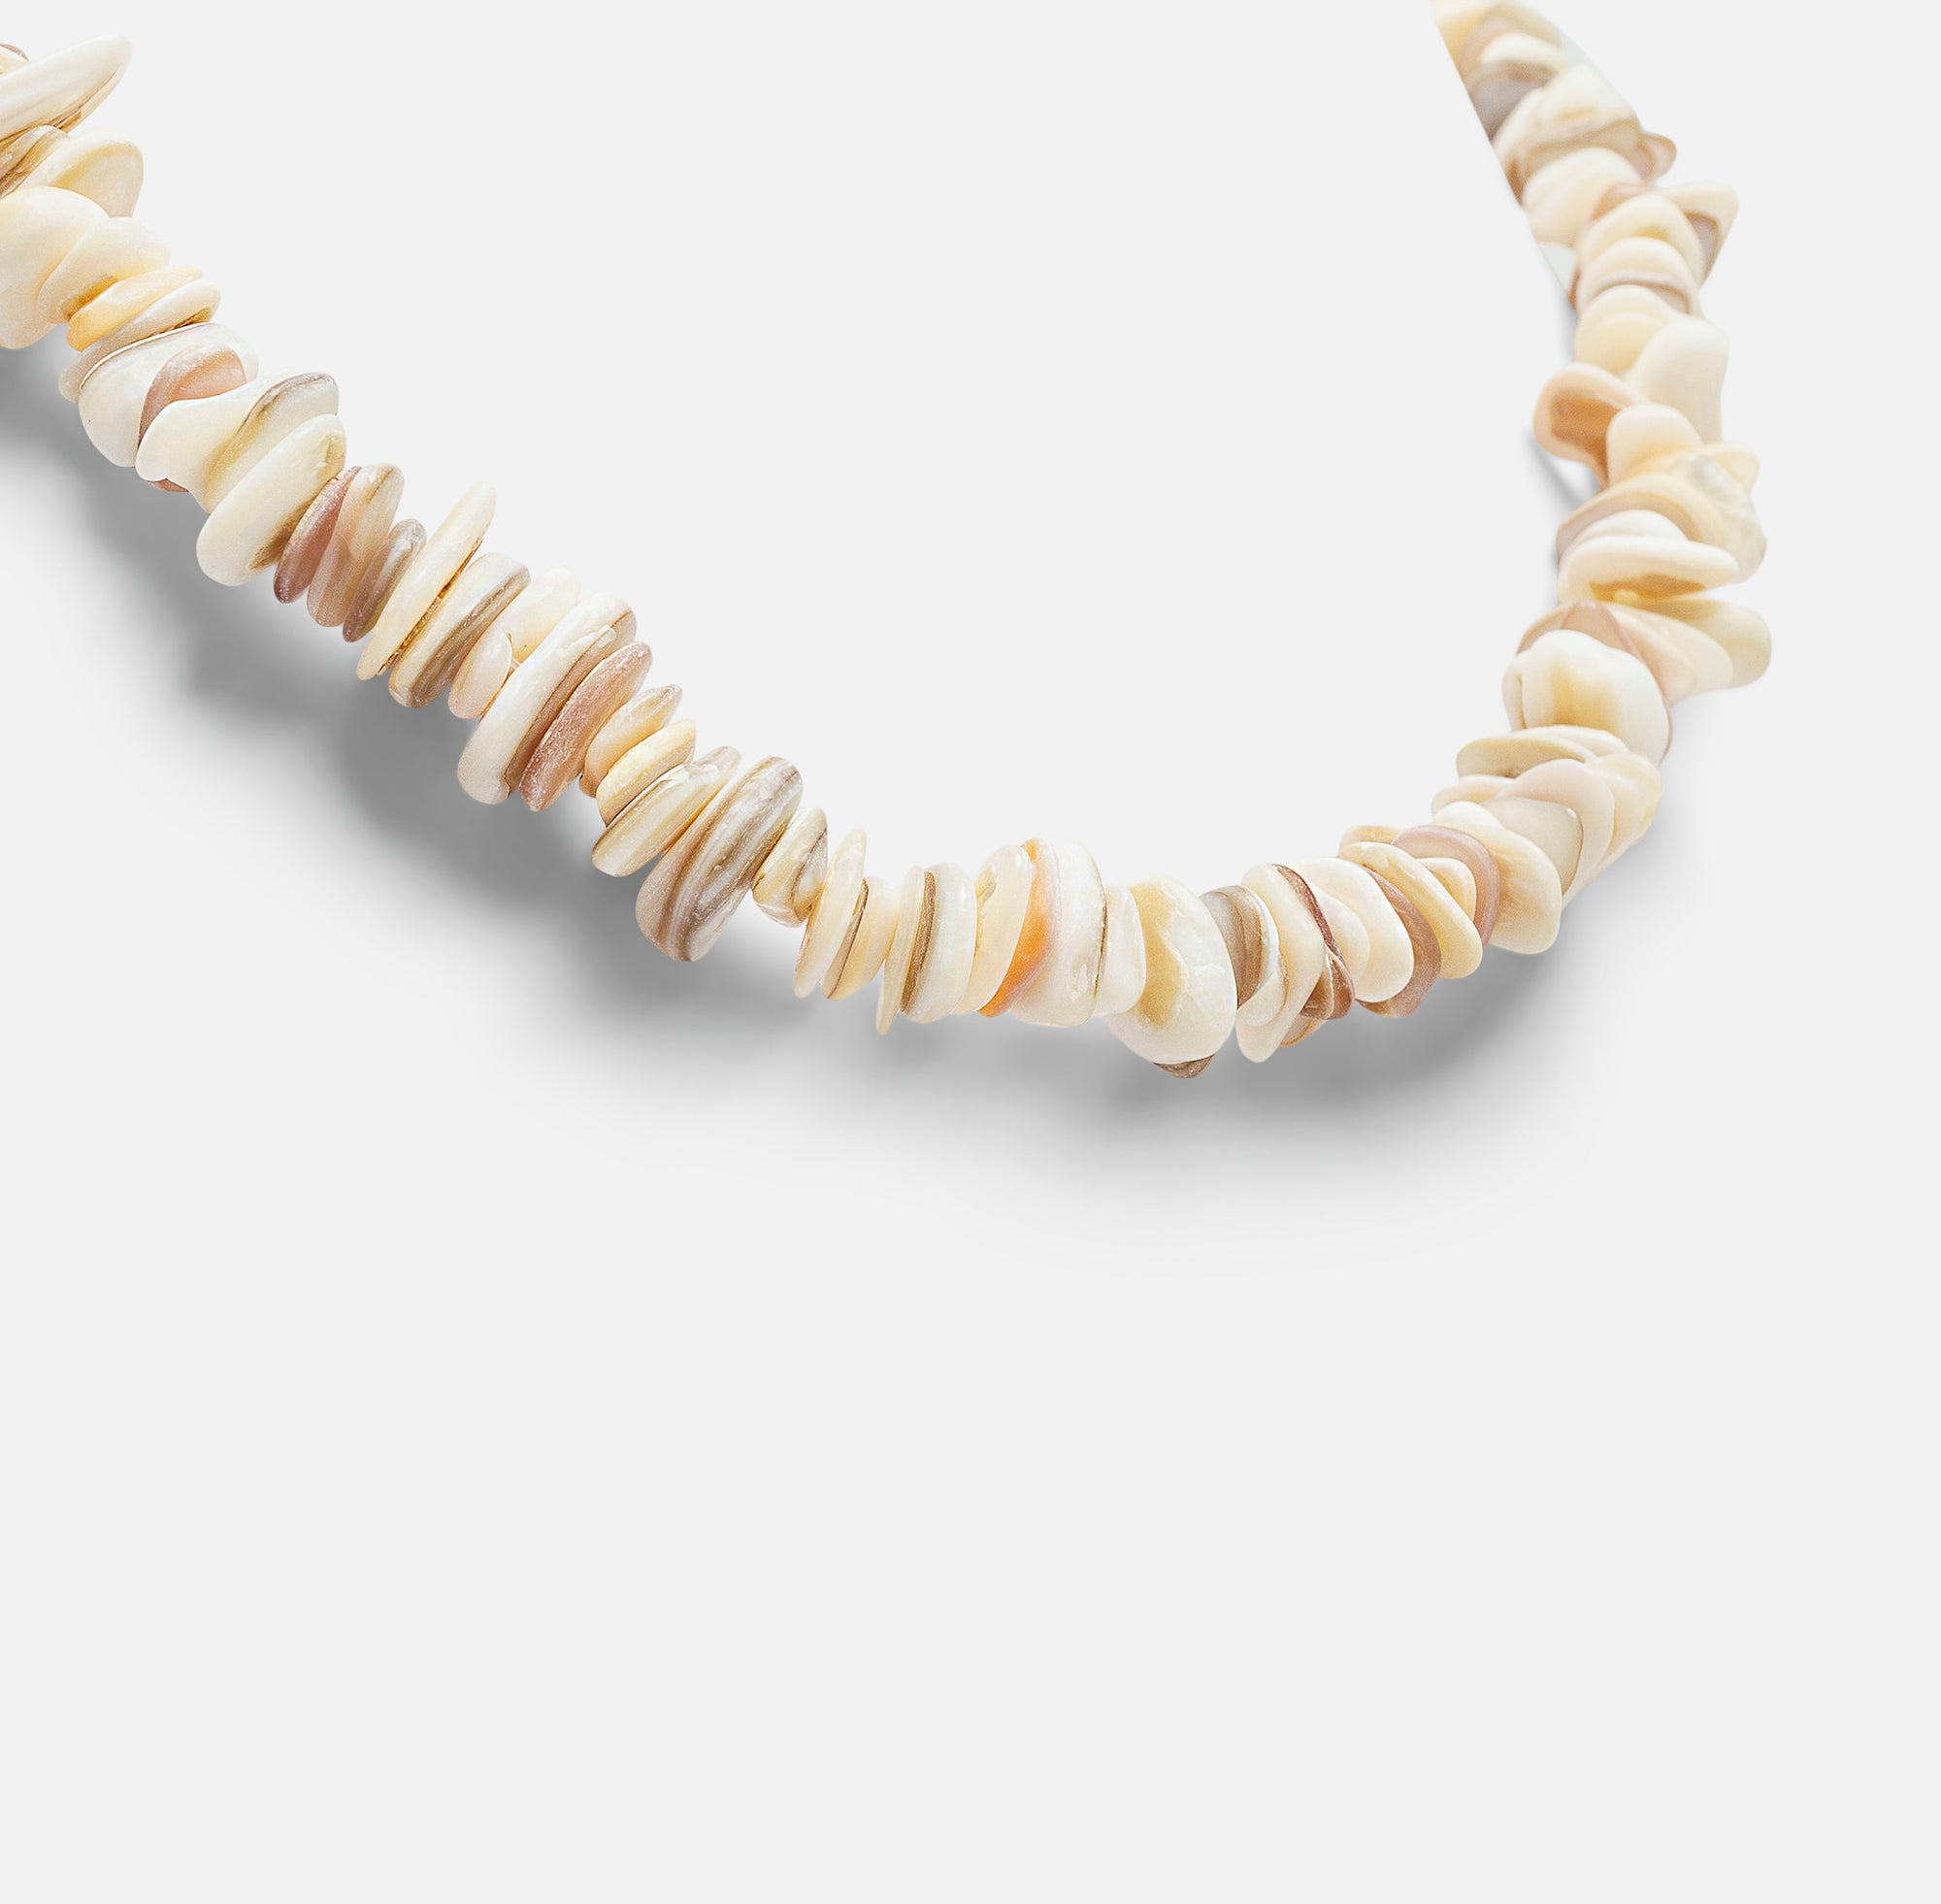 Amazon.com: BlueRica Smooth Puka Shell Beads Necklace (14